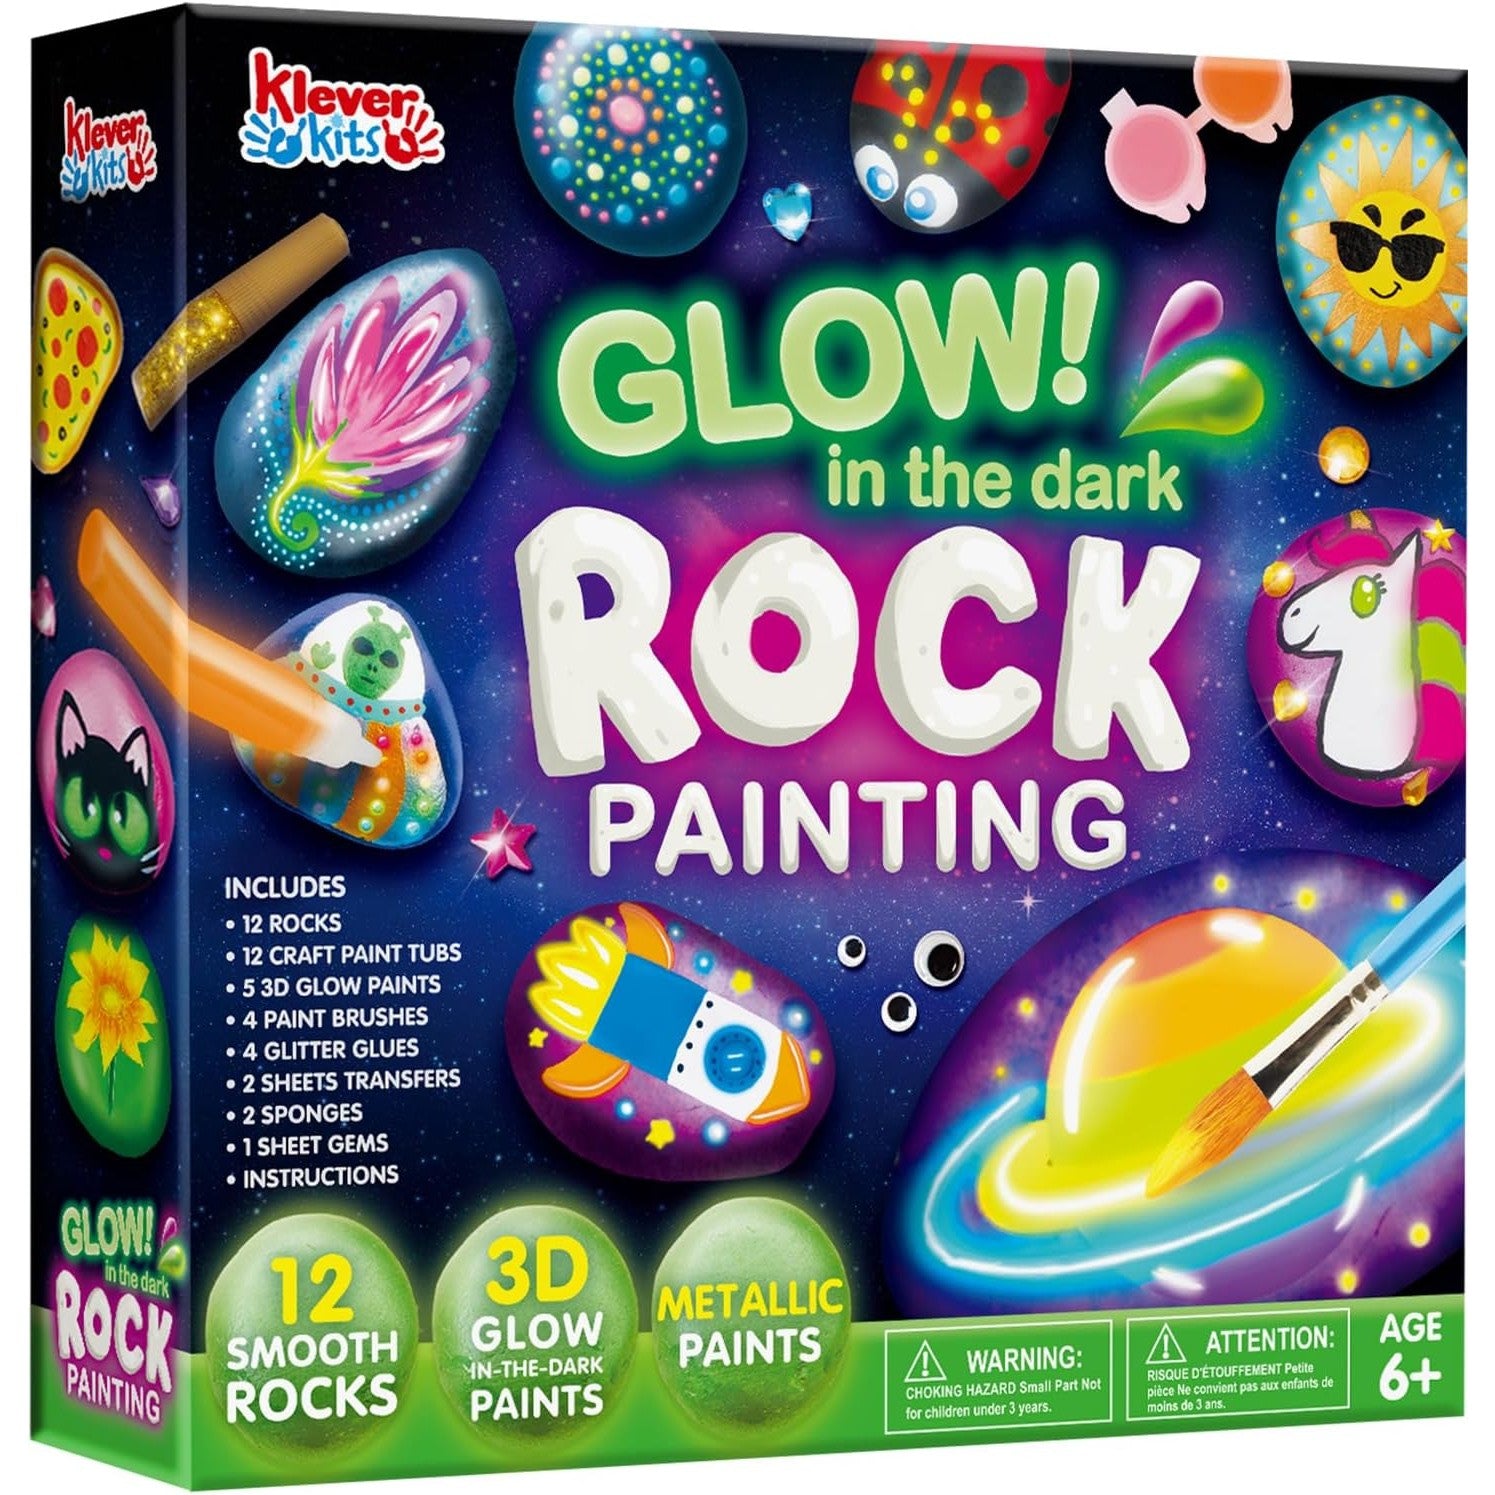 Creativity for Kids Halloween Hide & Seek Rock Painting Kit (Regular)